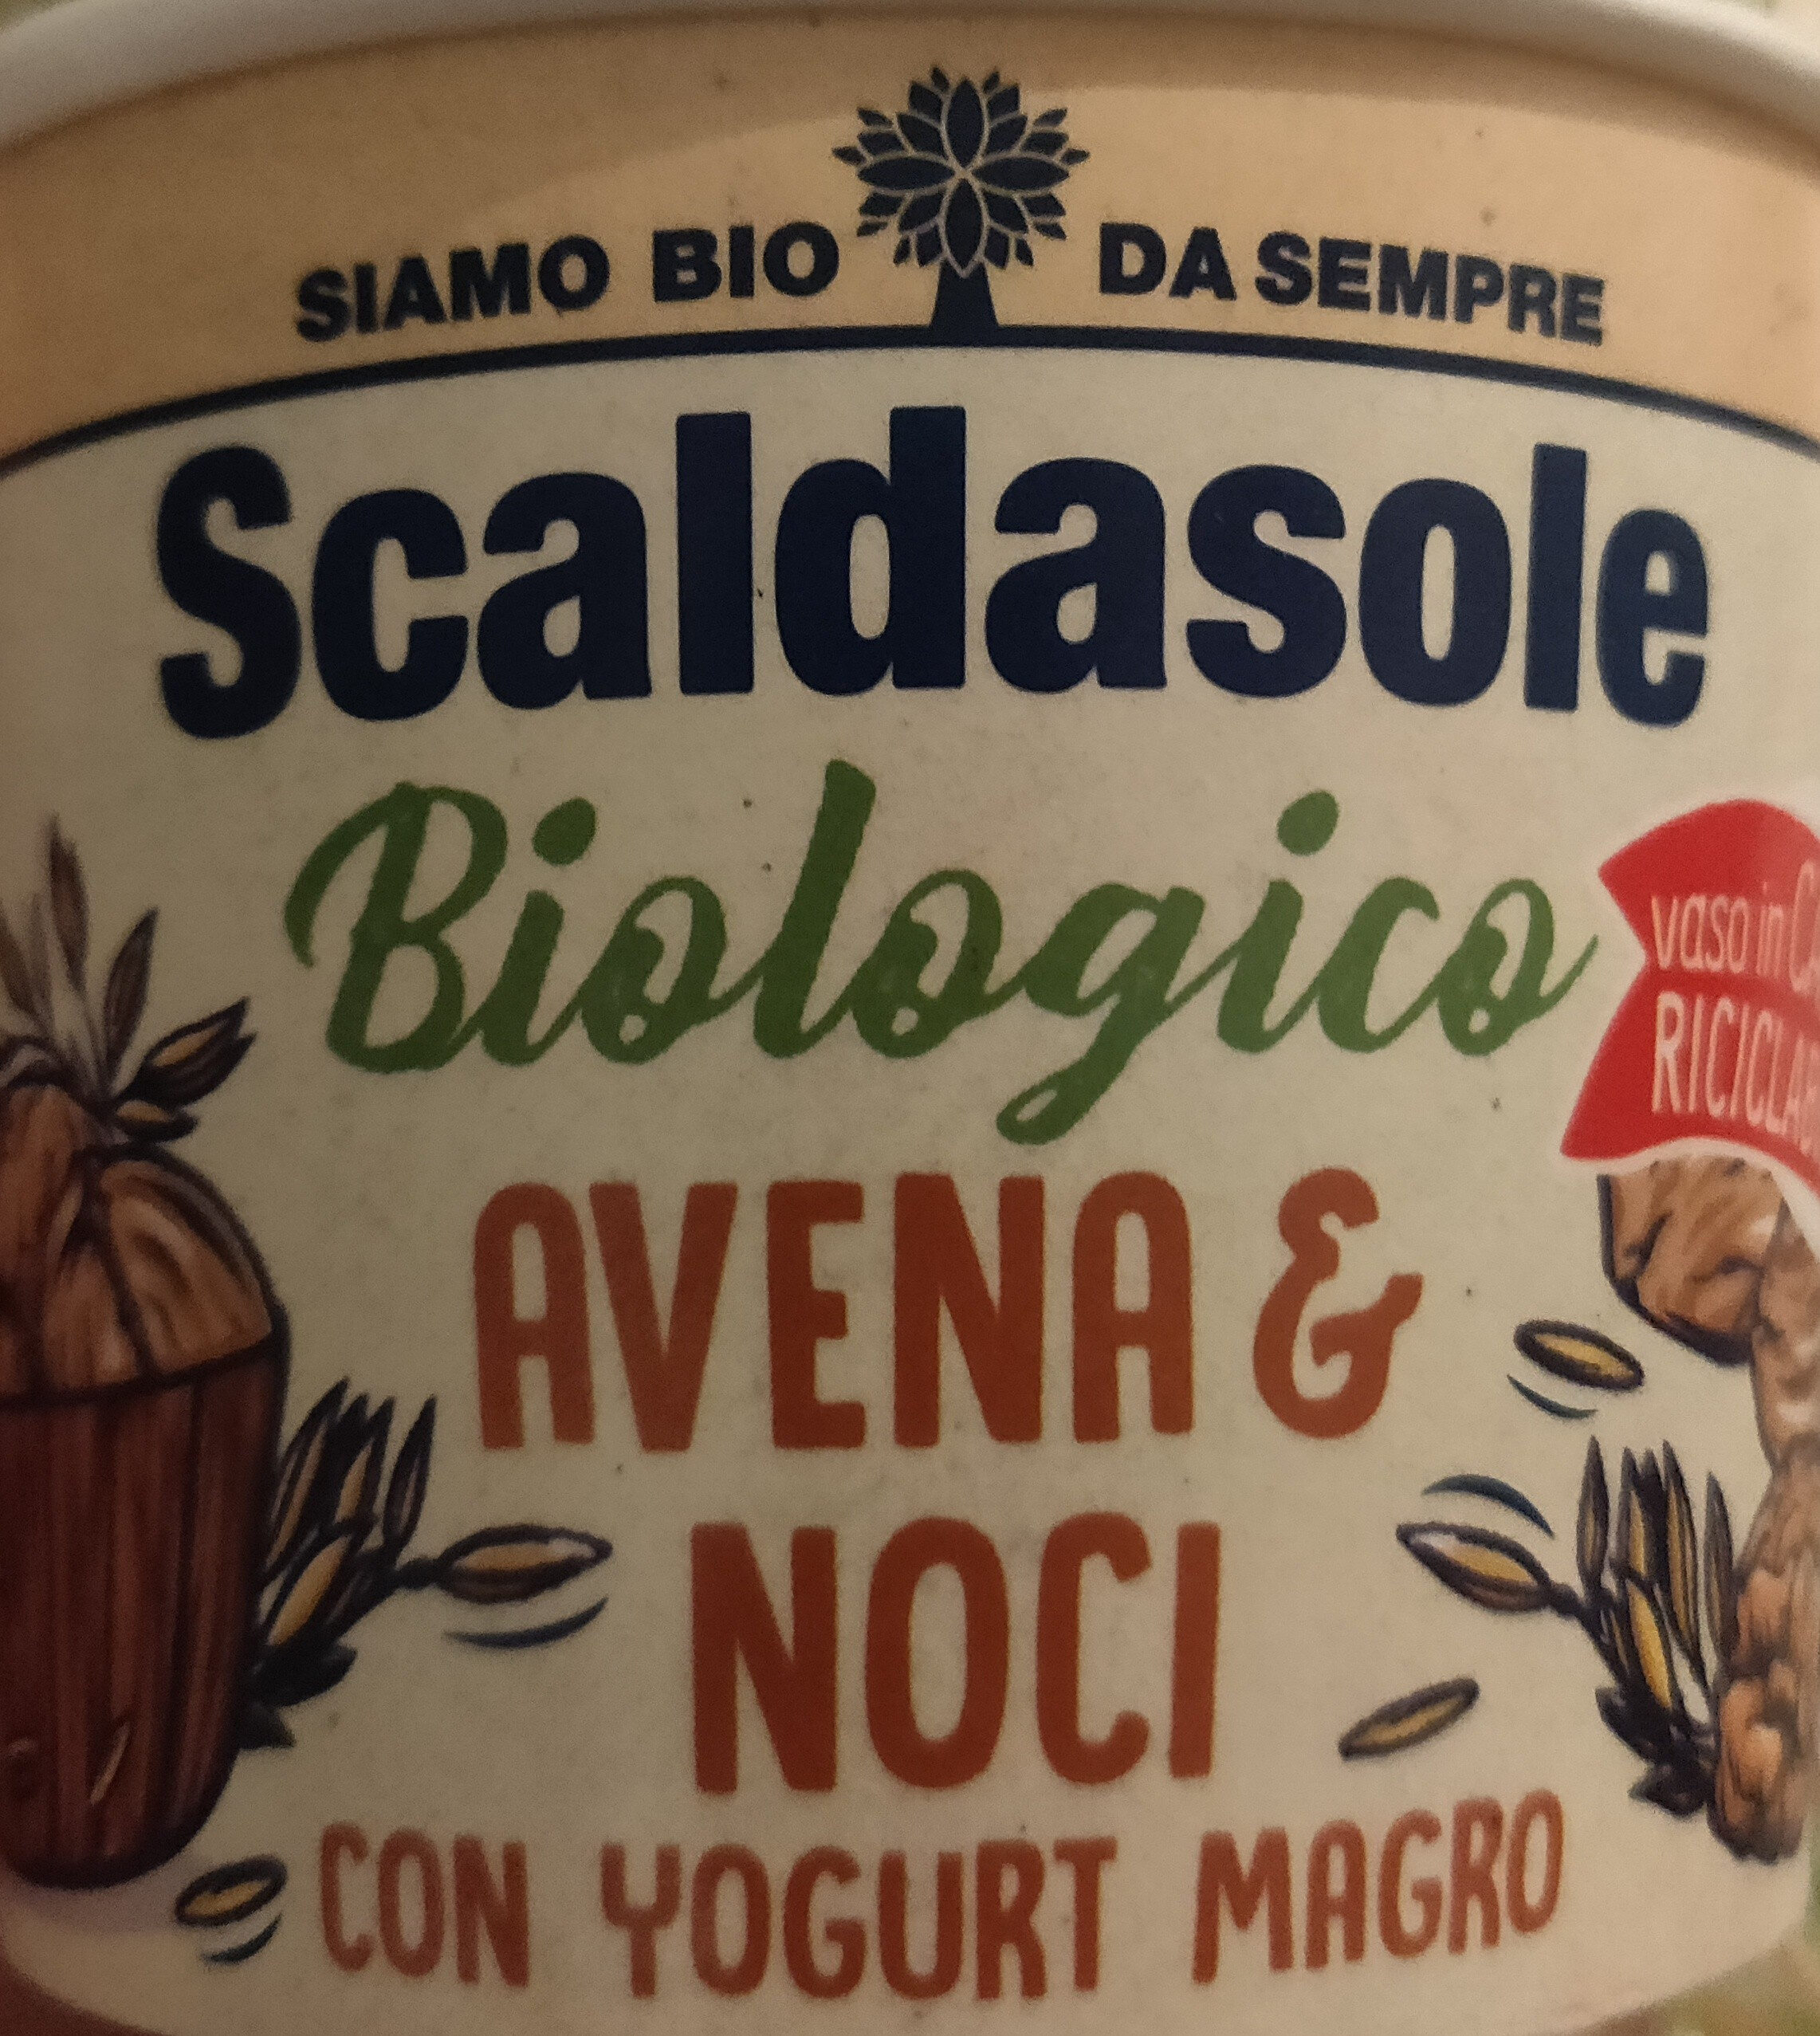 Yogurt magro Avena e Noci - Product - it